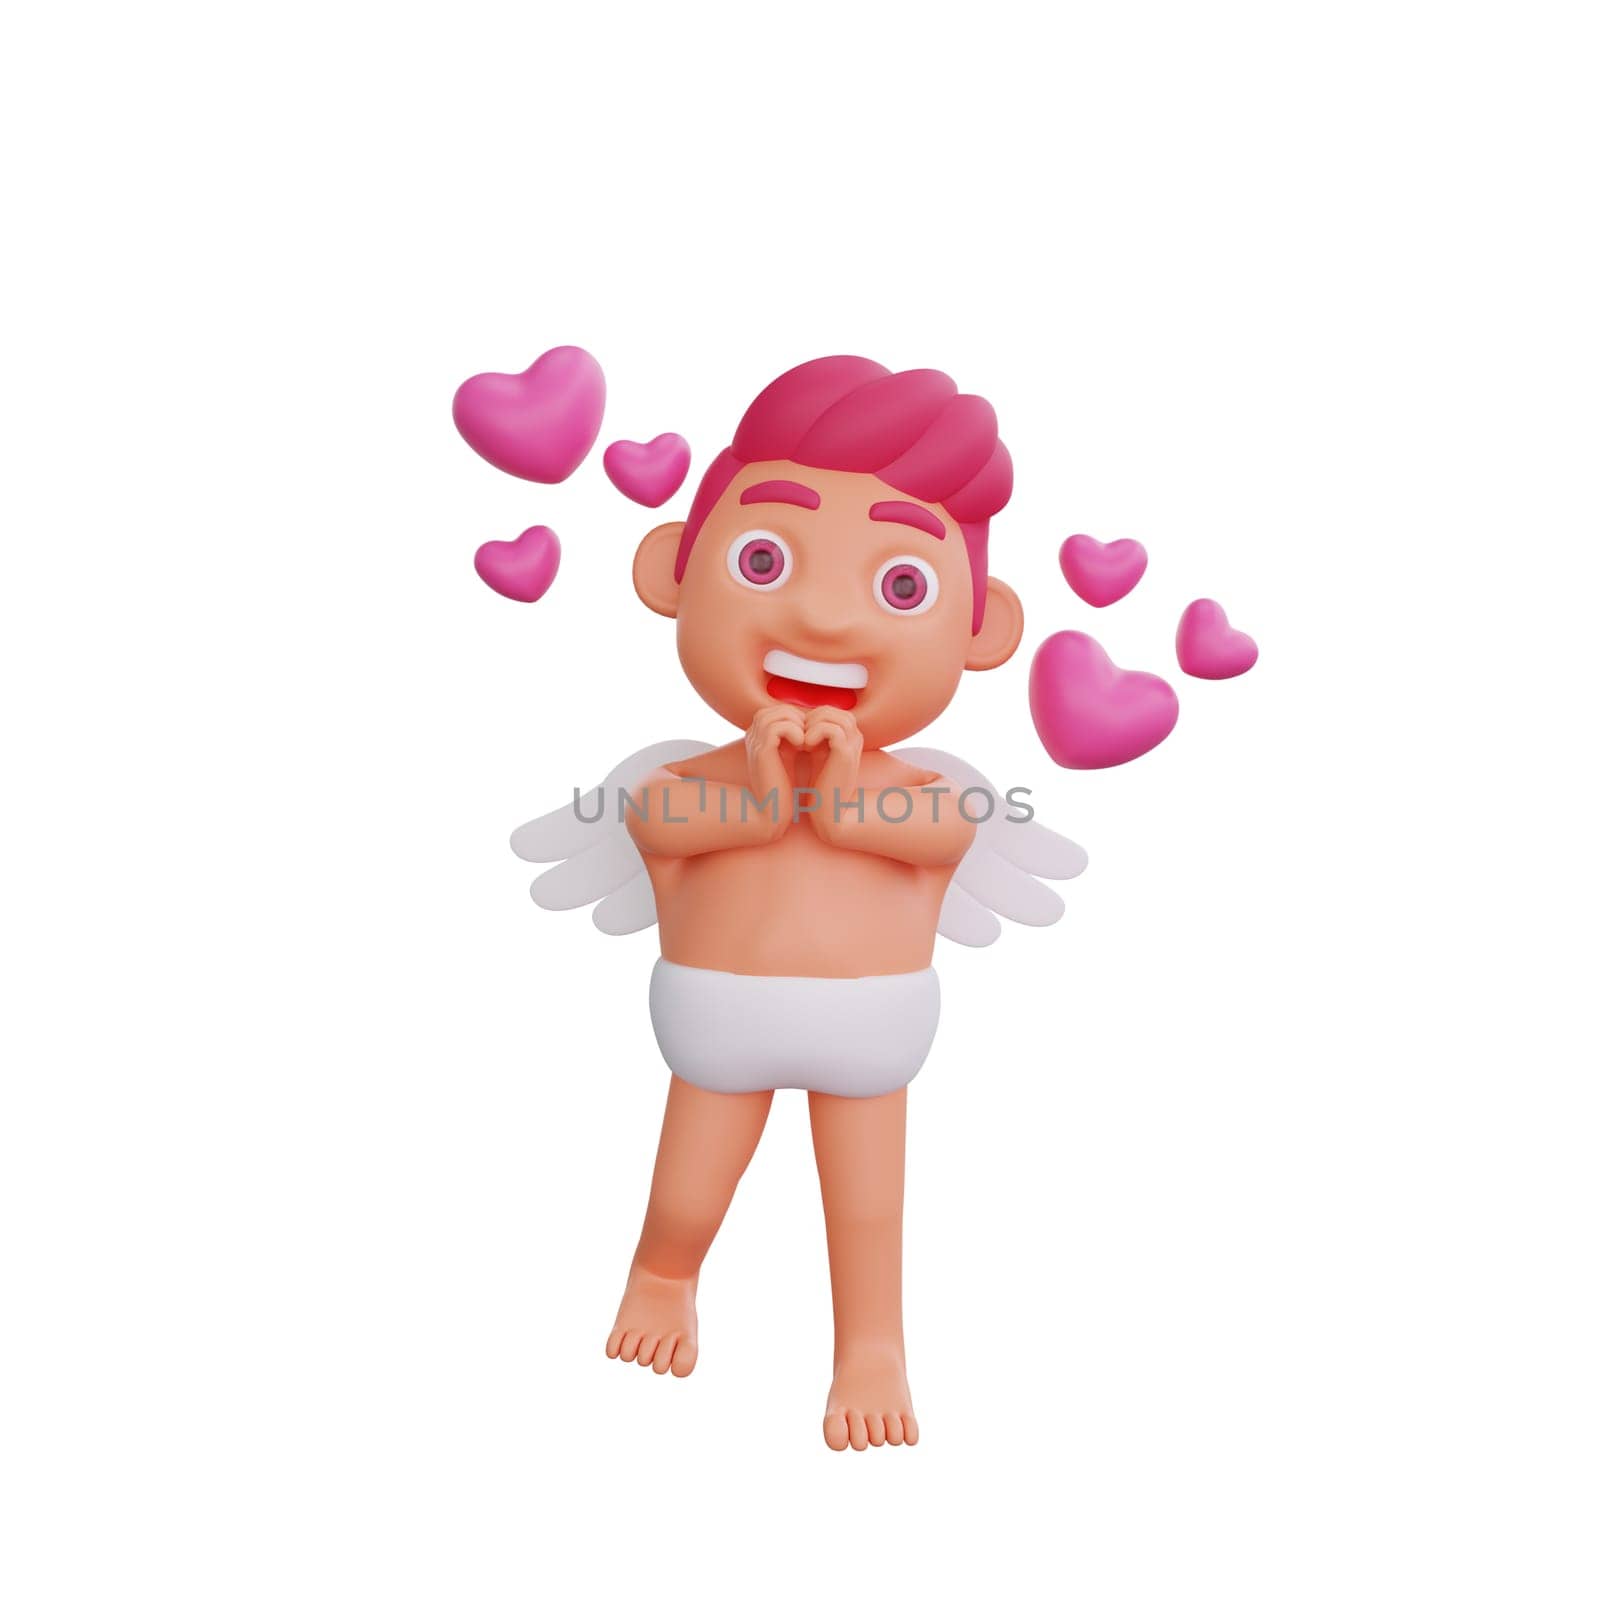 3D illustration of Valentine Cupid character beaming with joy by Rahmat_Djayusman